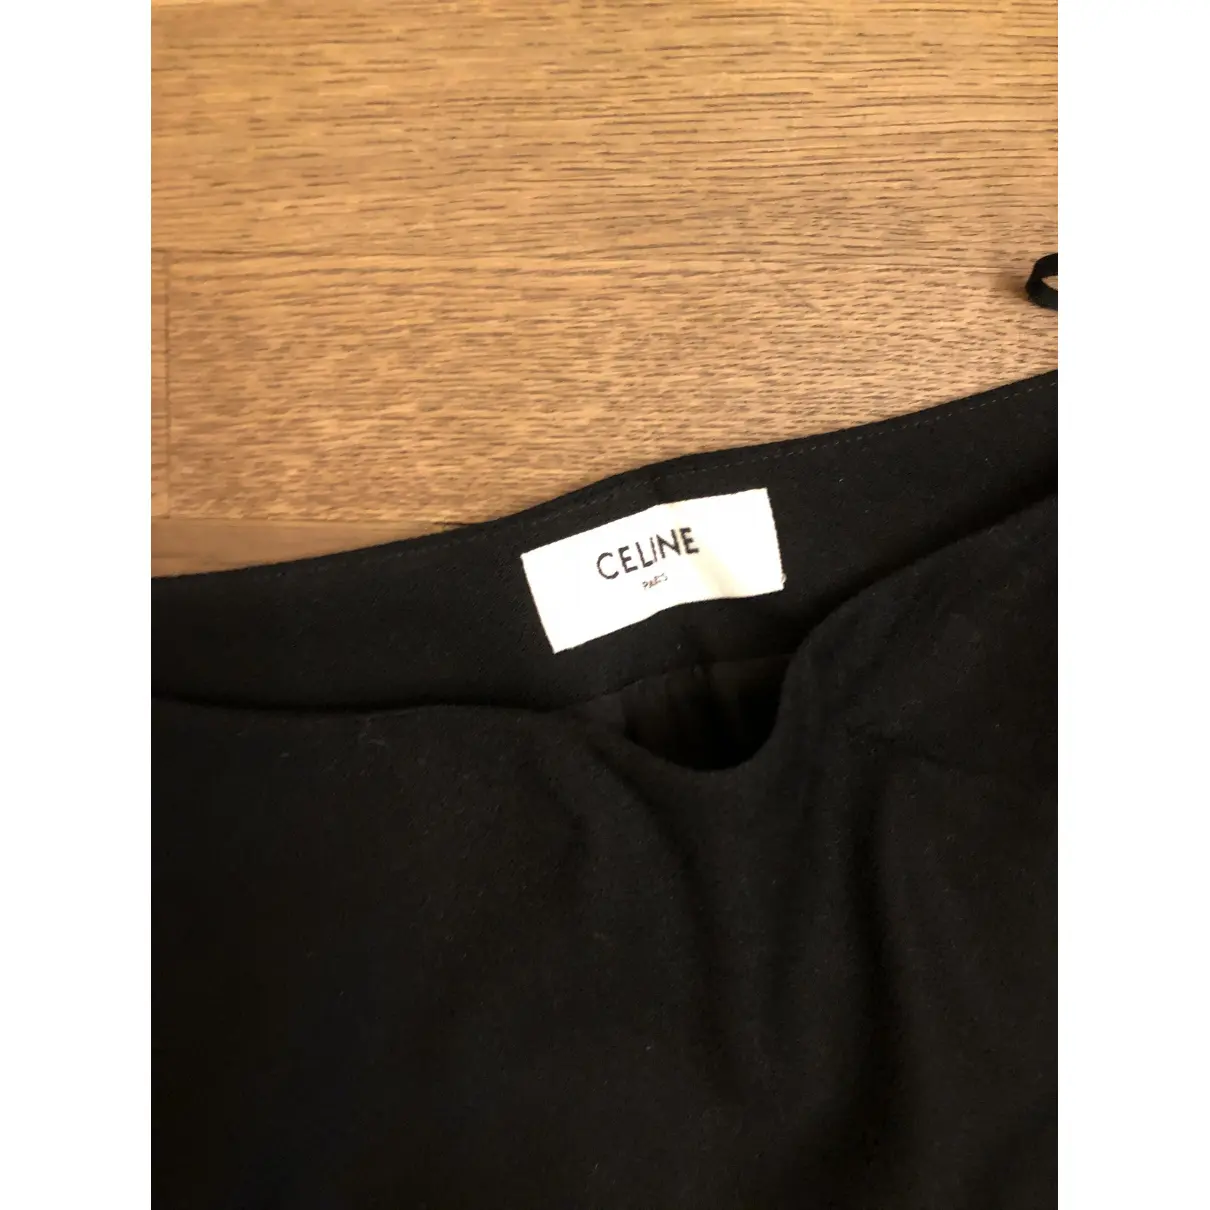 Buy Celine Wool maxi skirt online